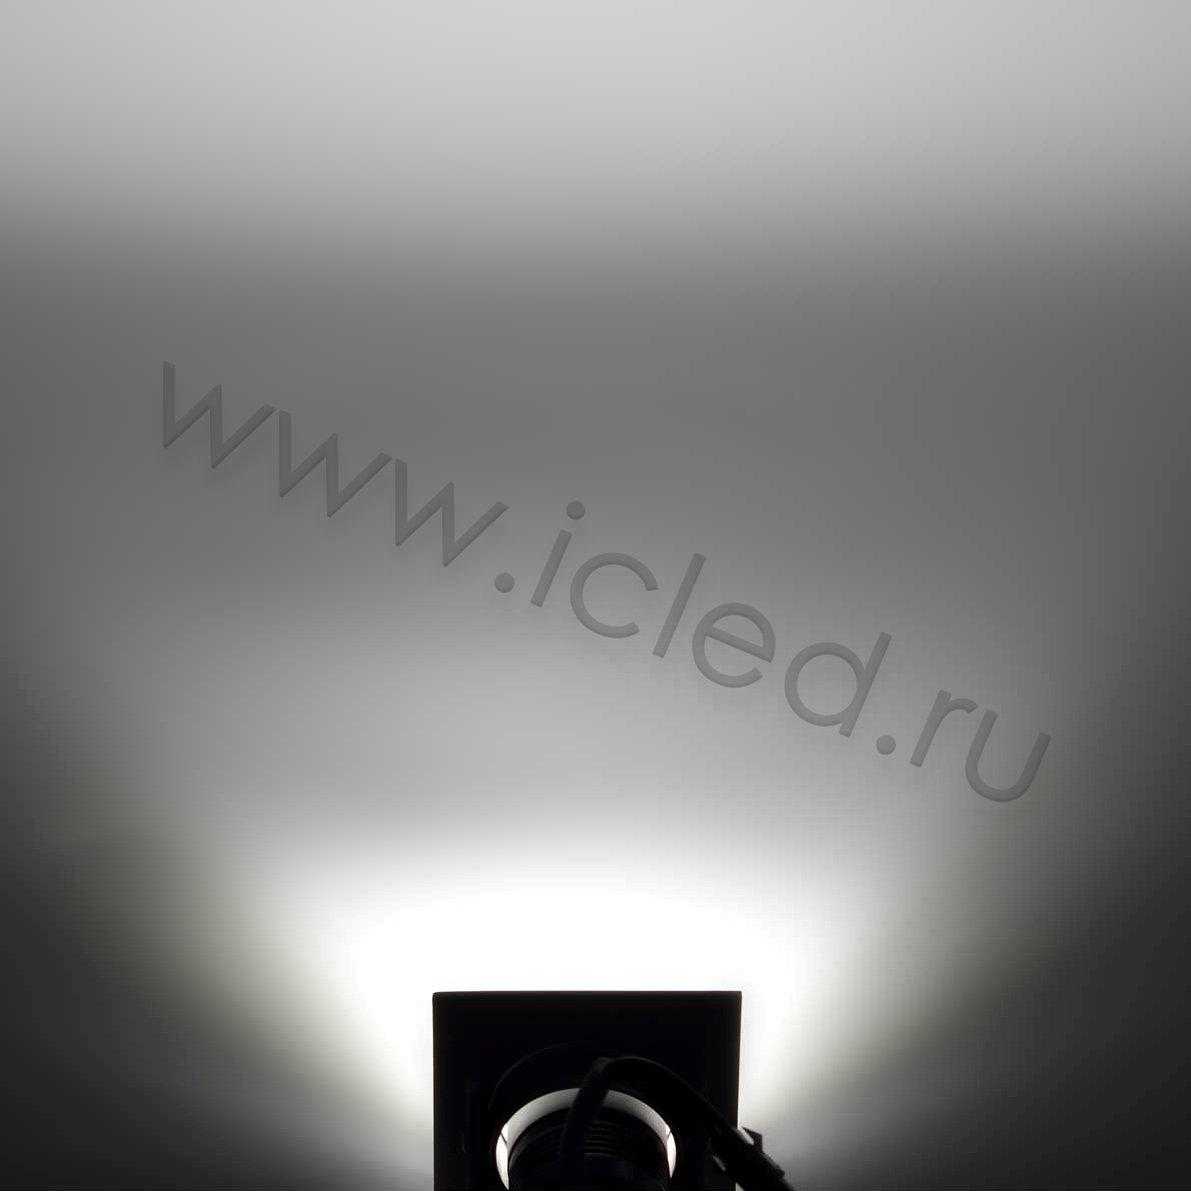 Светодиодные светильники Светодиодный светильник встраиваемый 65 Series white housing BW302 (3W,220V,day white)